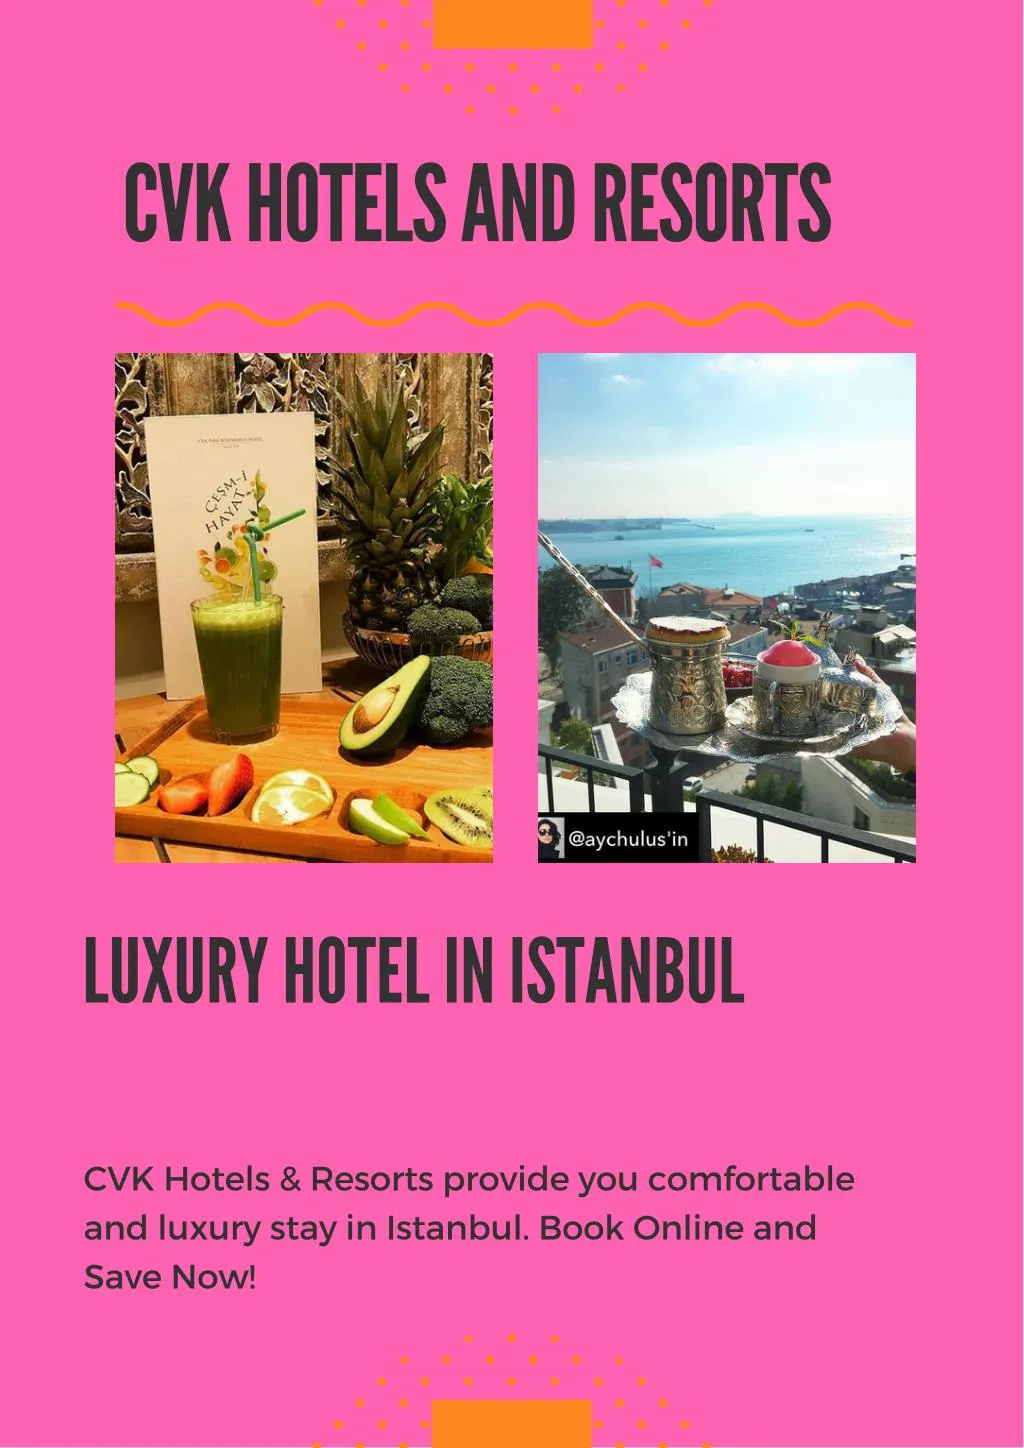 cvk hotels a nd resorts